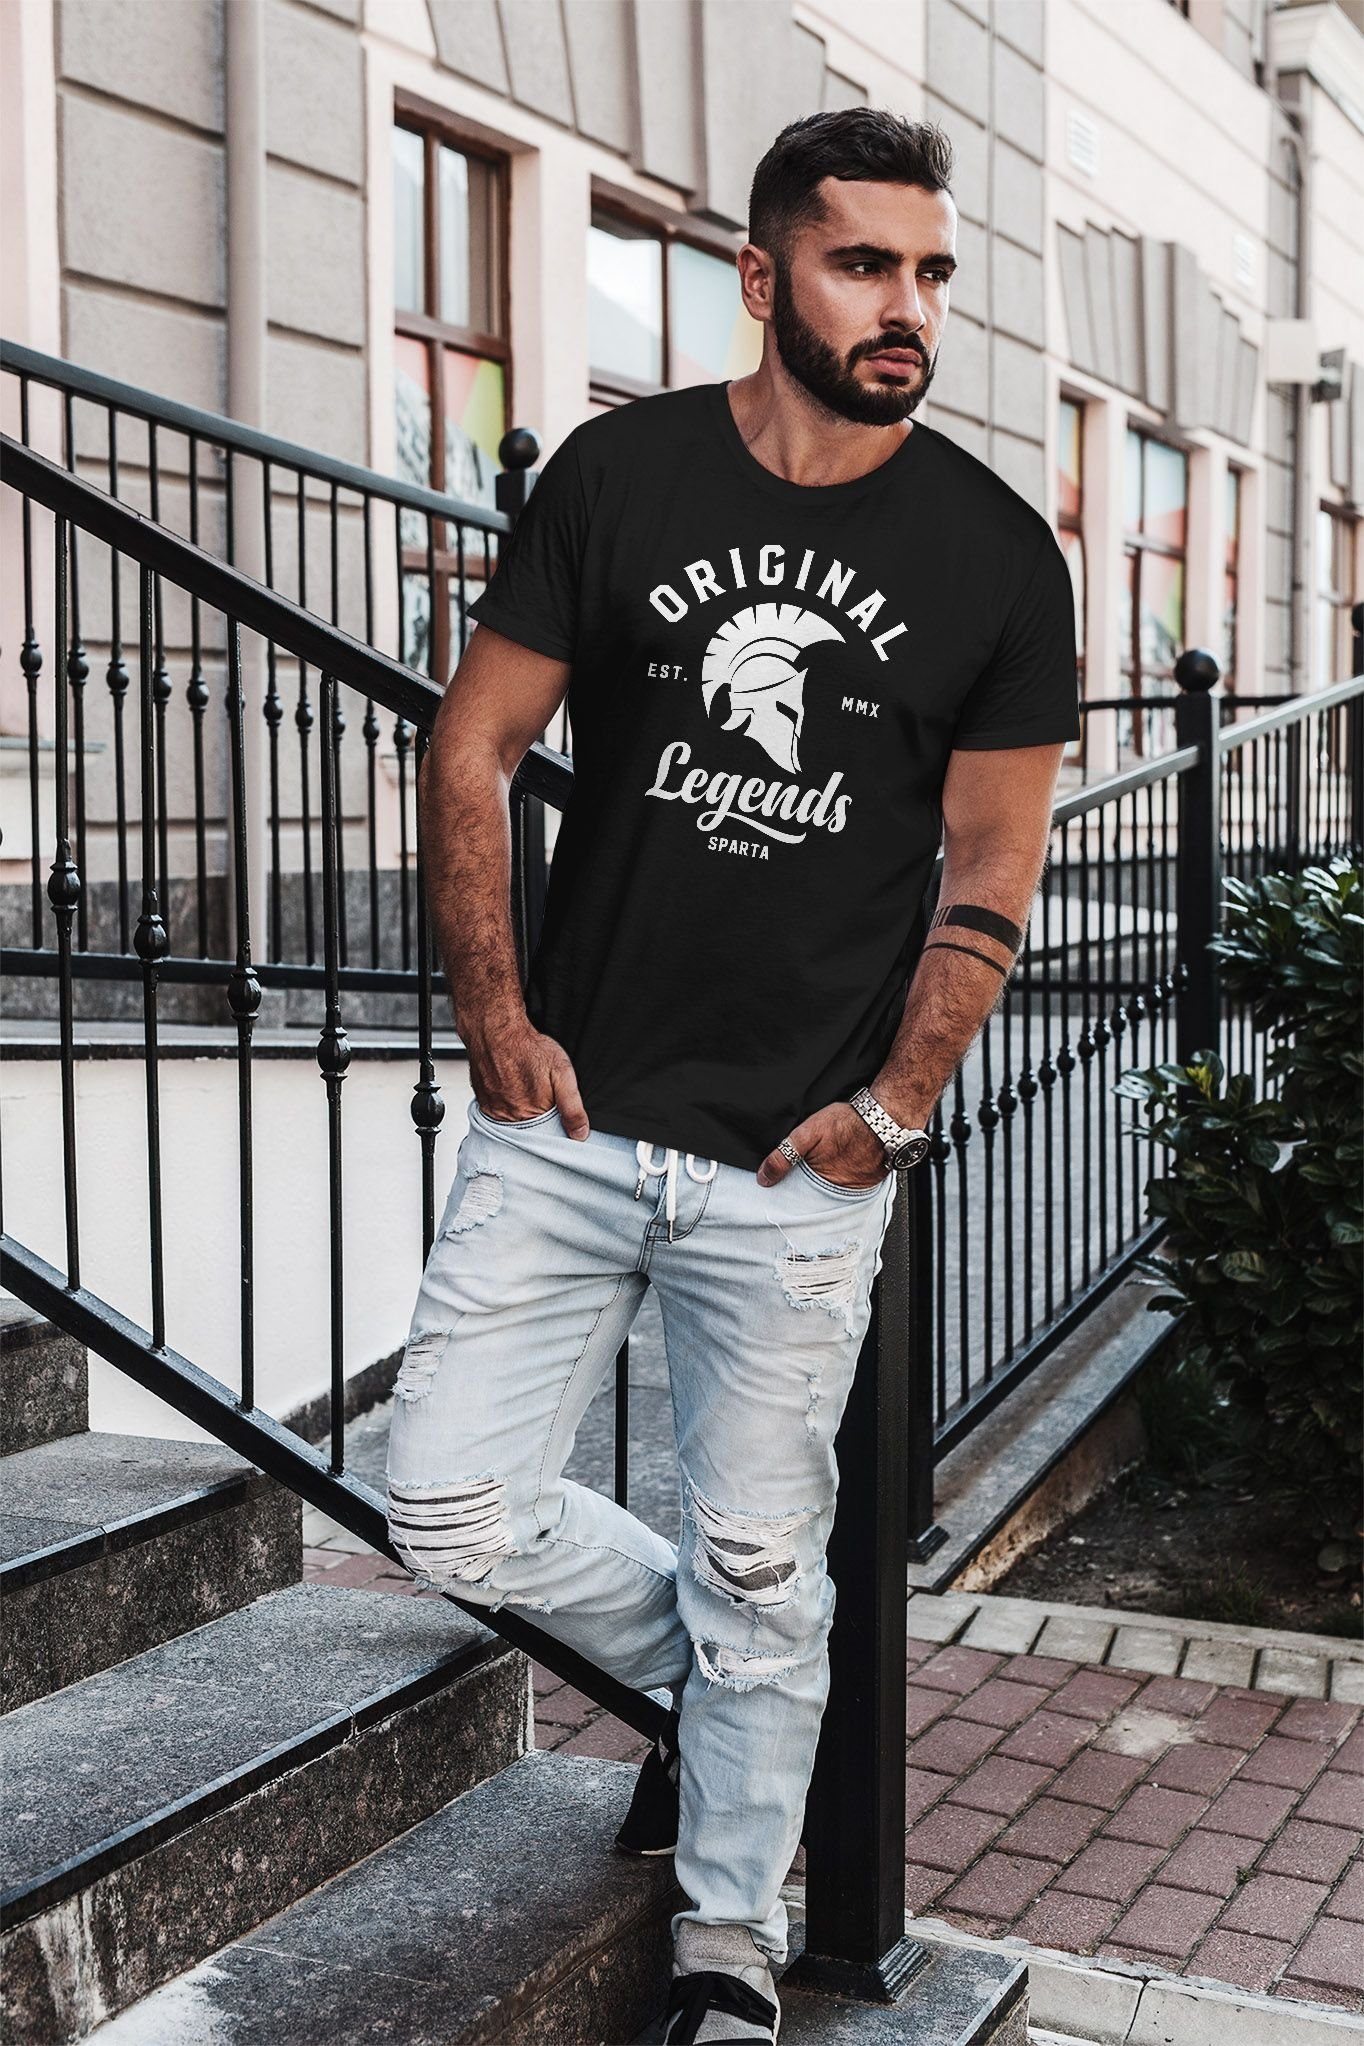 Neverless Print-Shirt Streetwear Print Sparta T-Shirt mit Neverless® schwarz Herren Original Legends Gladiator Slim Fit